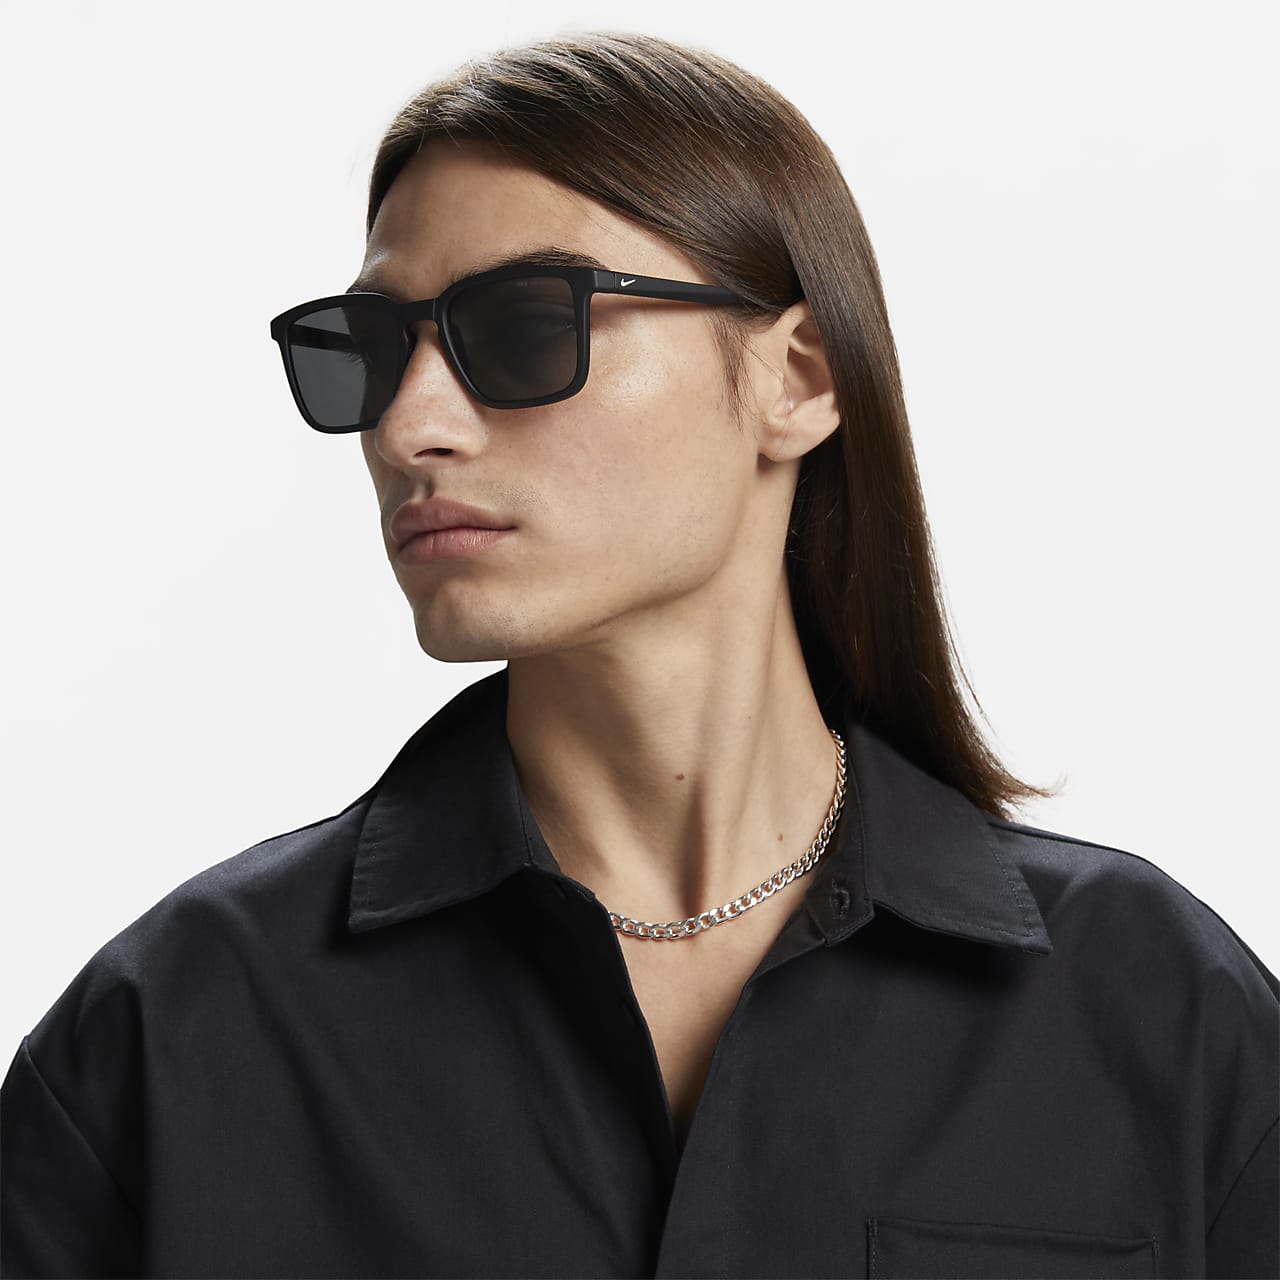 Nike Circuit Polarized Sunglasses. Nike.com